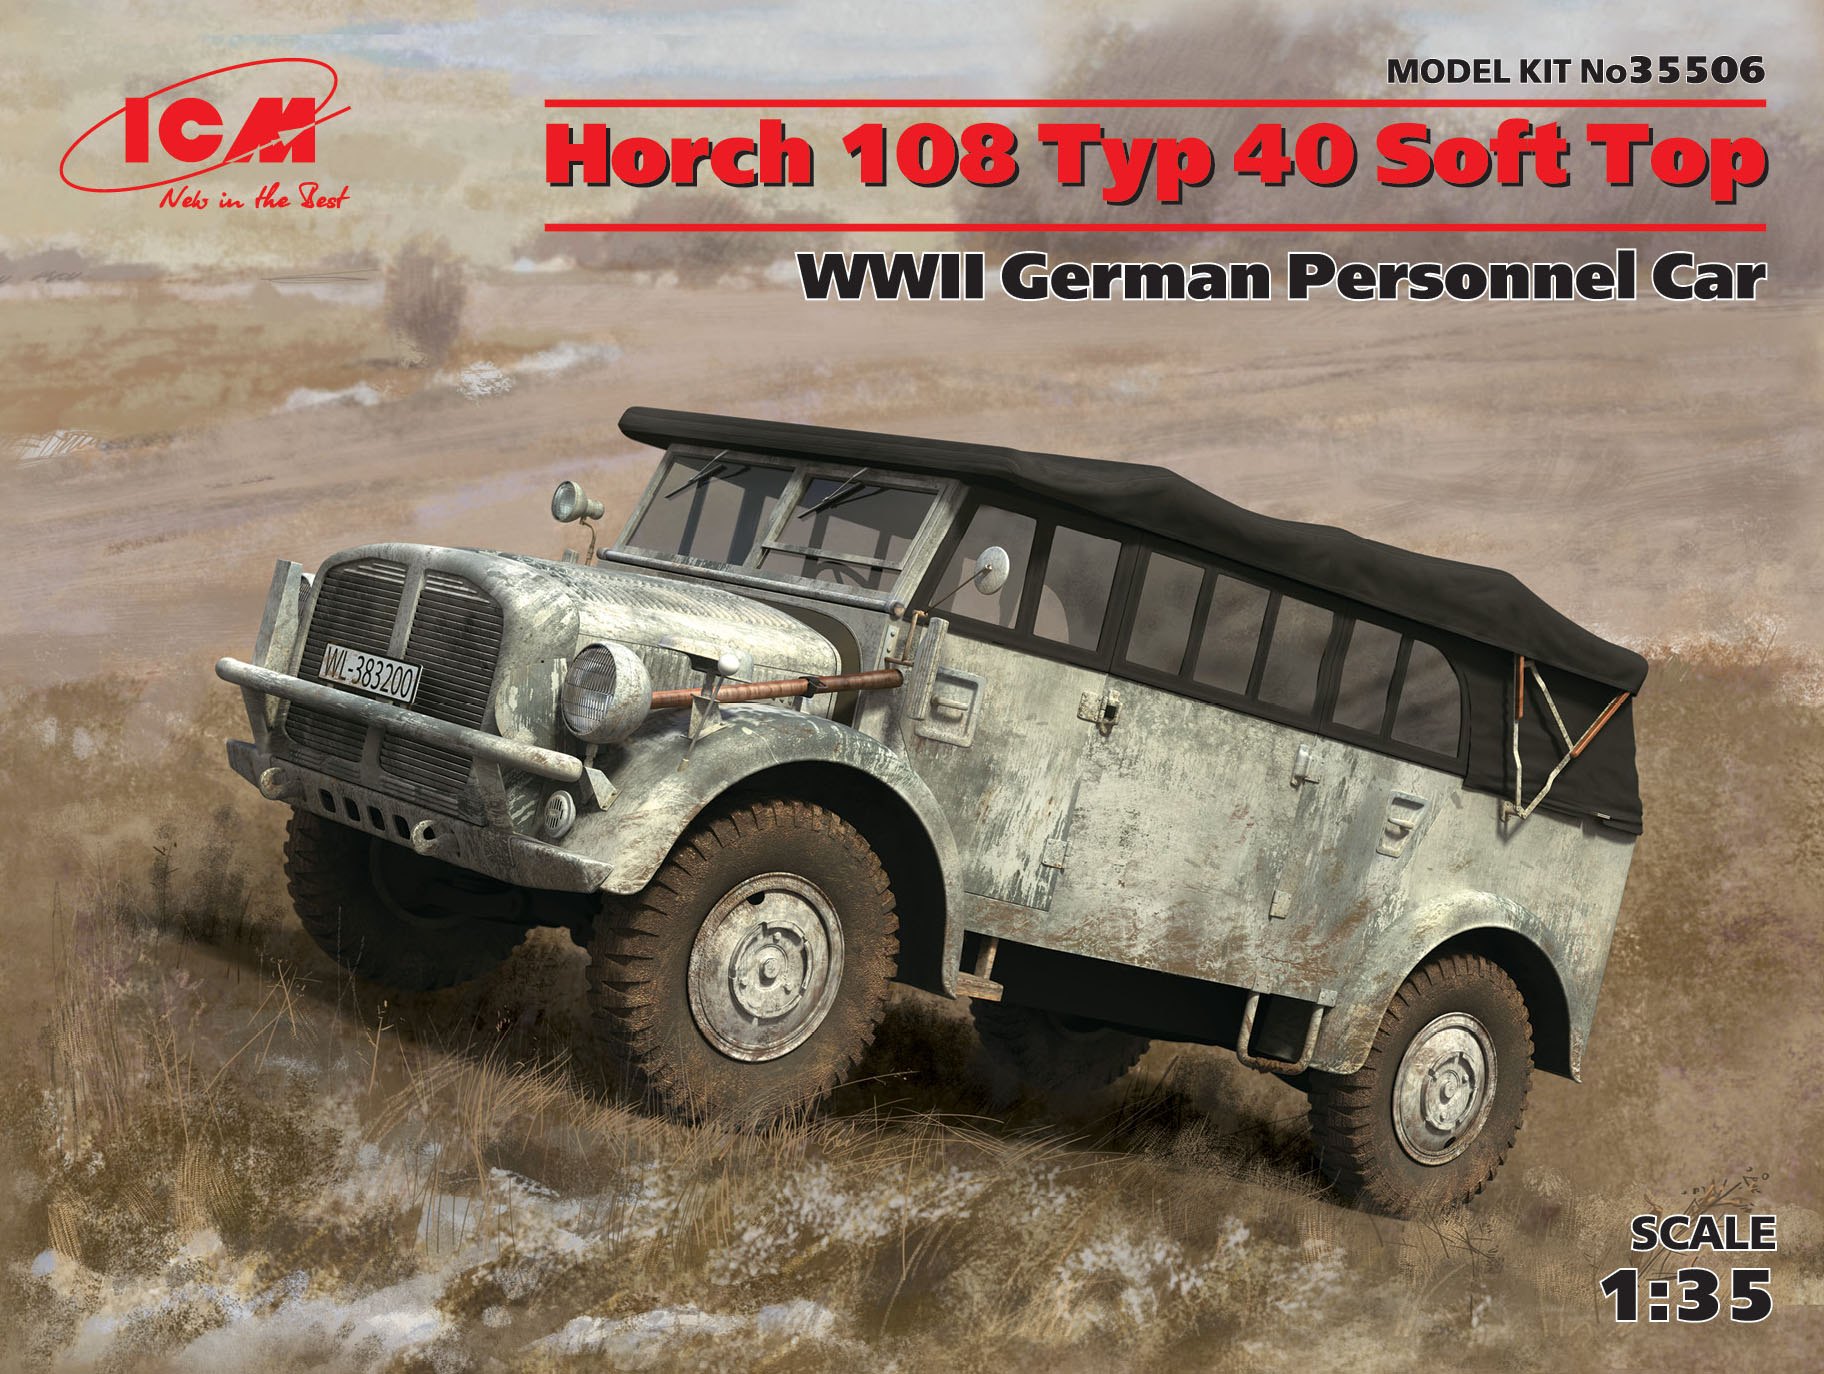 1/35　WWII ドイツ 重統制型軍用車 Type40 ホルヒ108 ソフトトップ